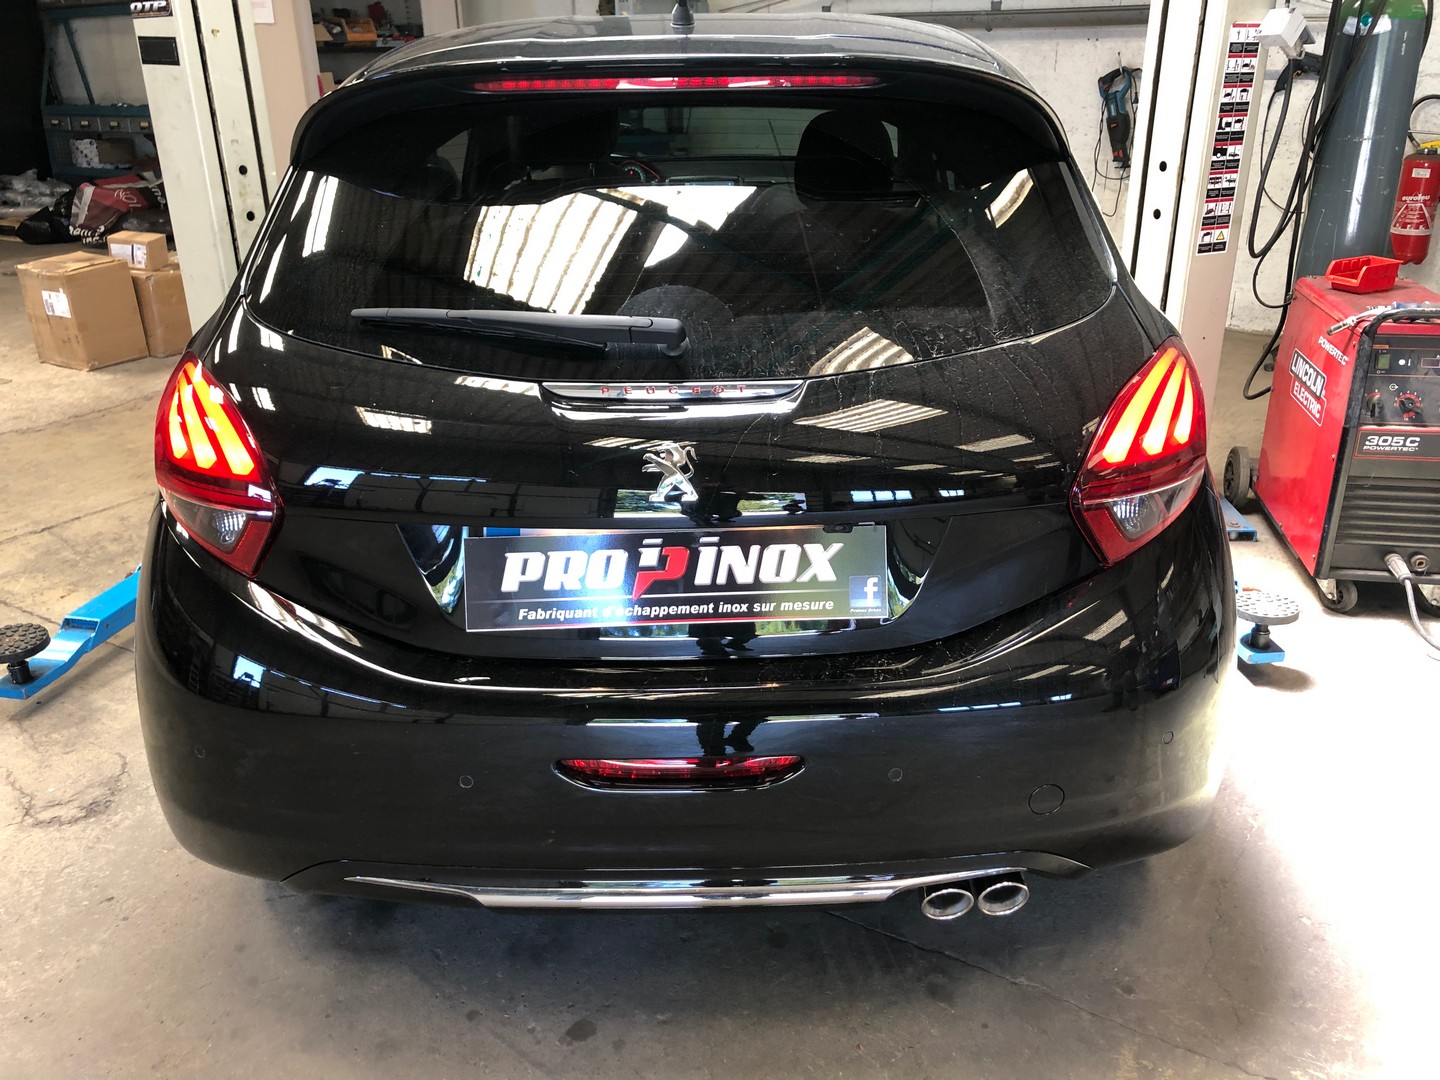 Proinox28 - Échappement inox Peugeot 208 GTI